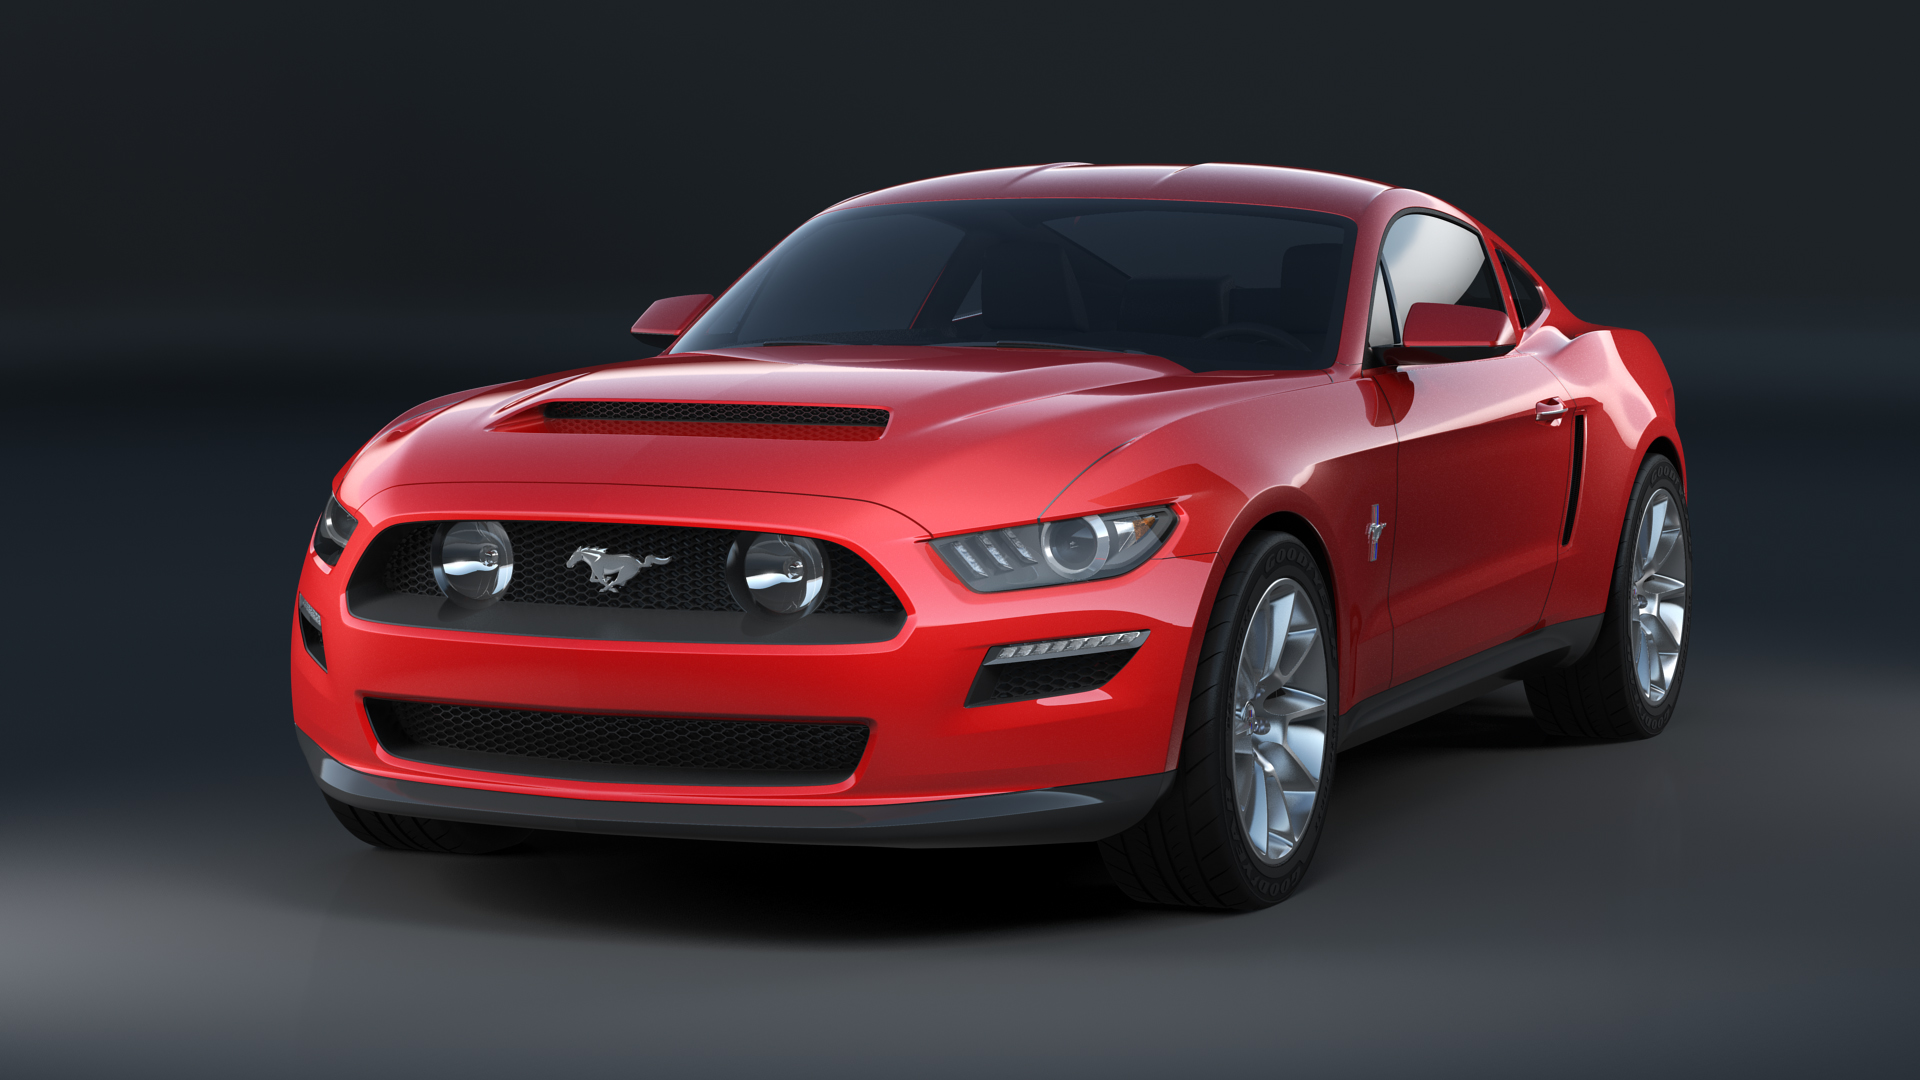 6th Generation Mustang Theme Development